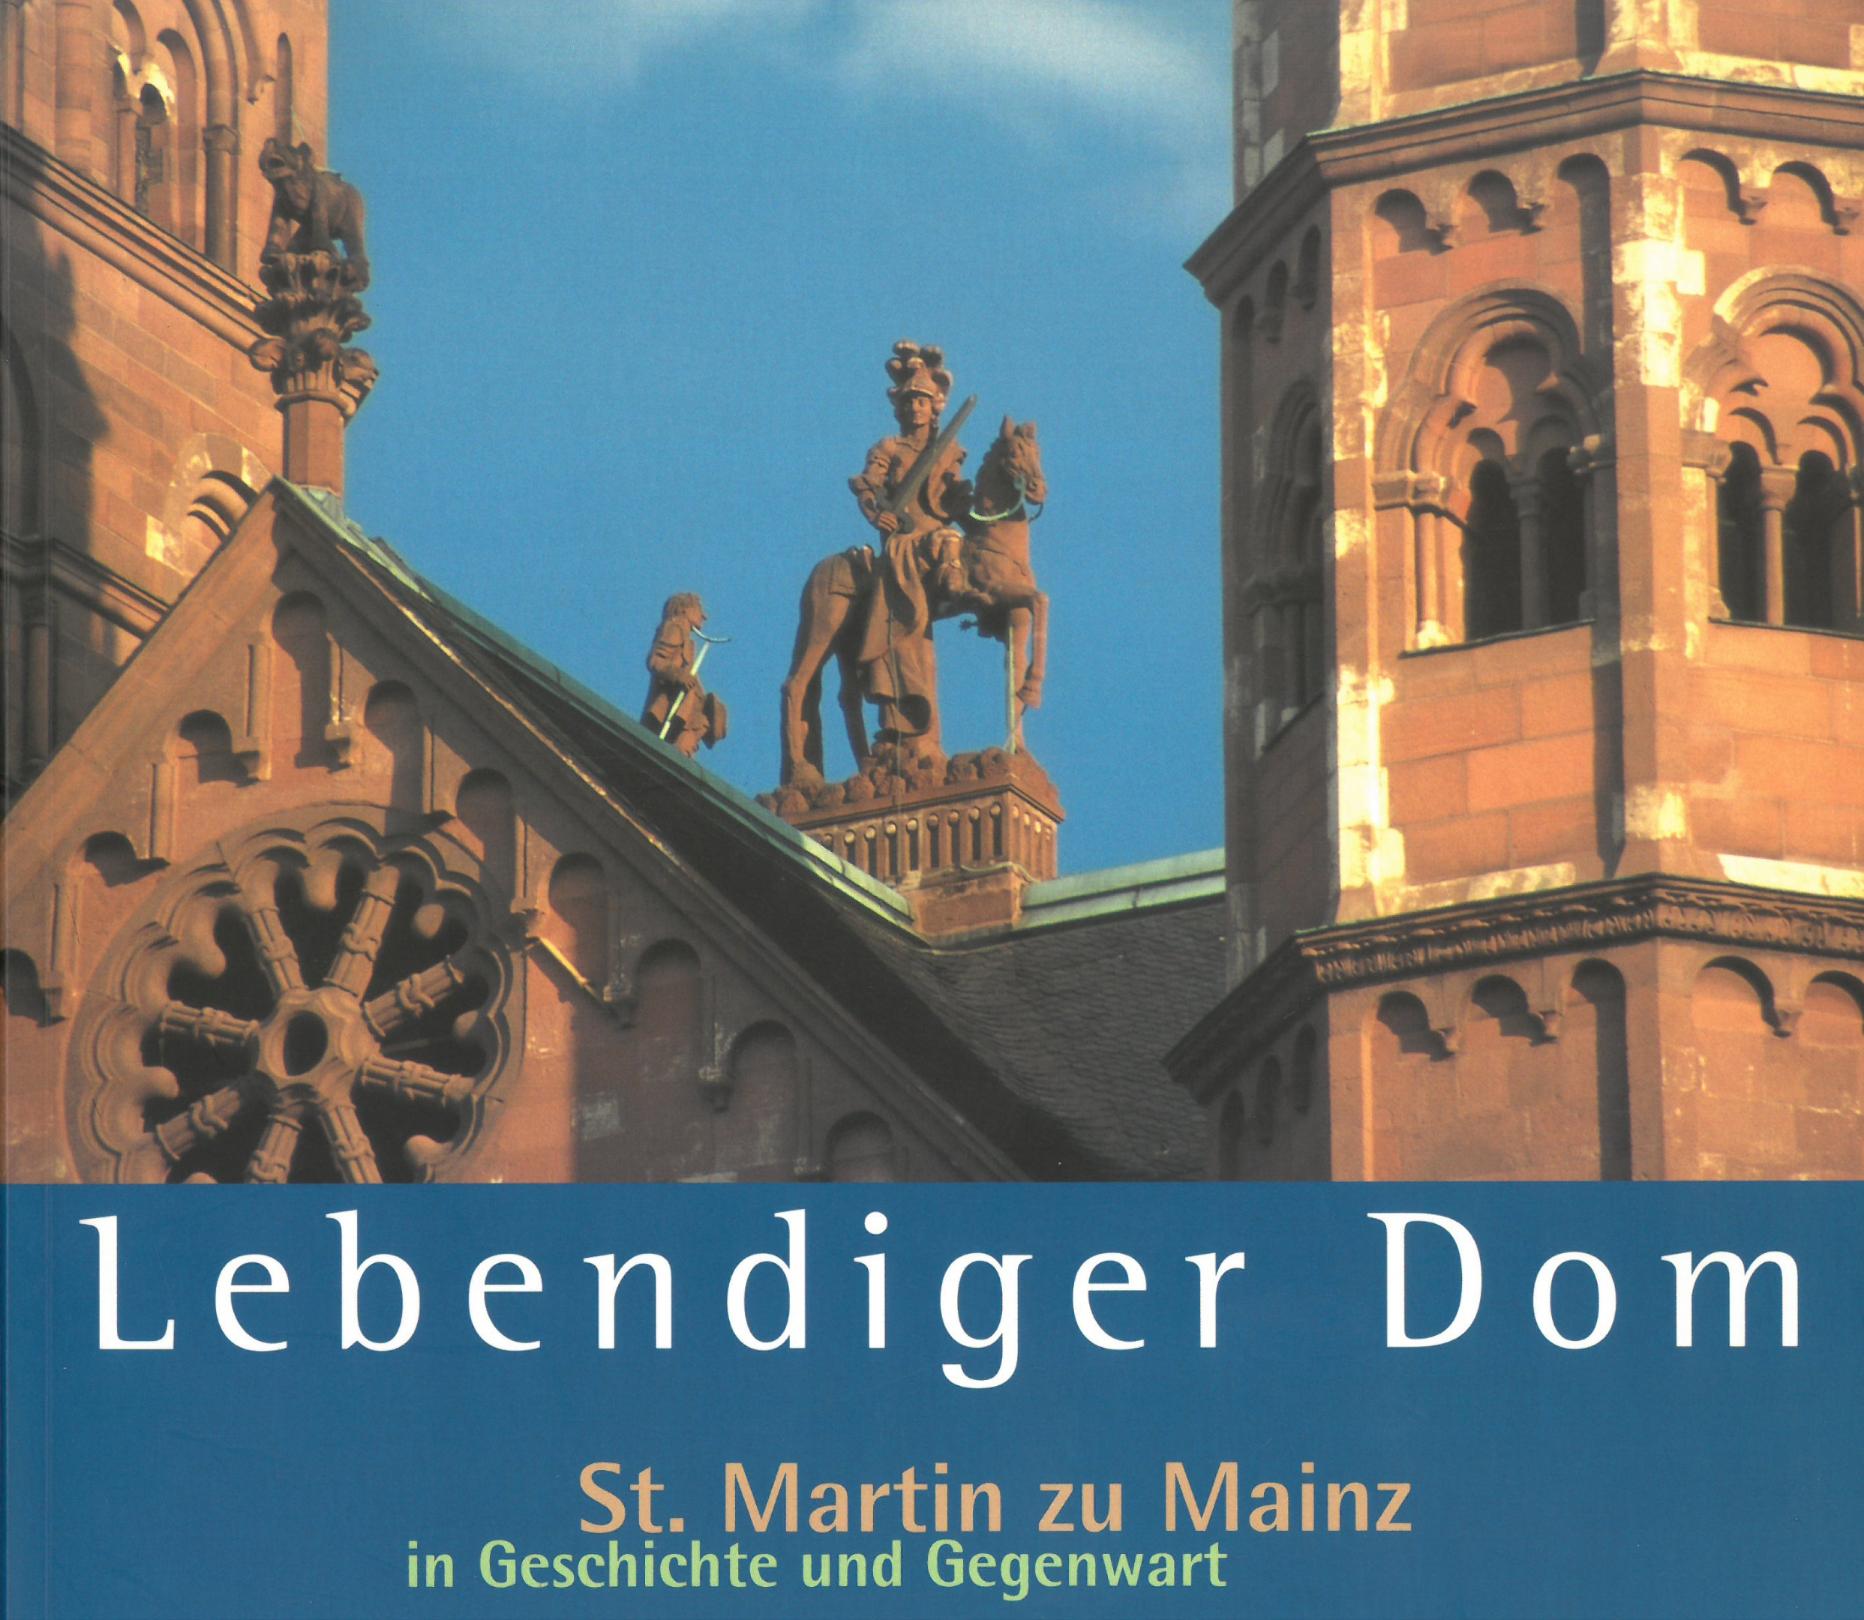 St. Martin zu Mainz